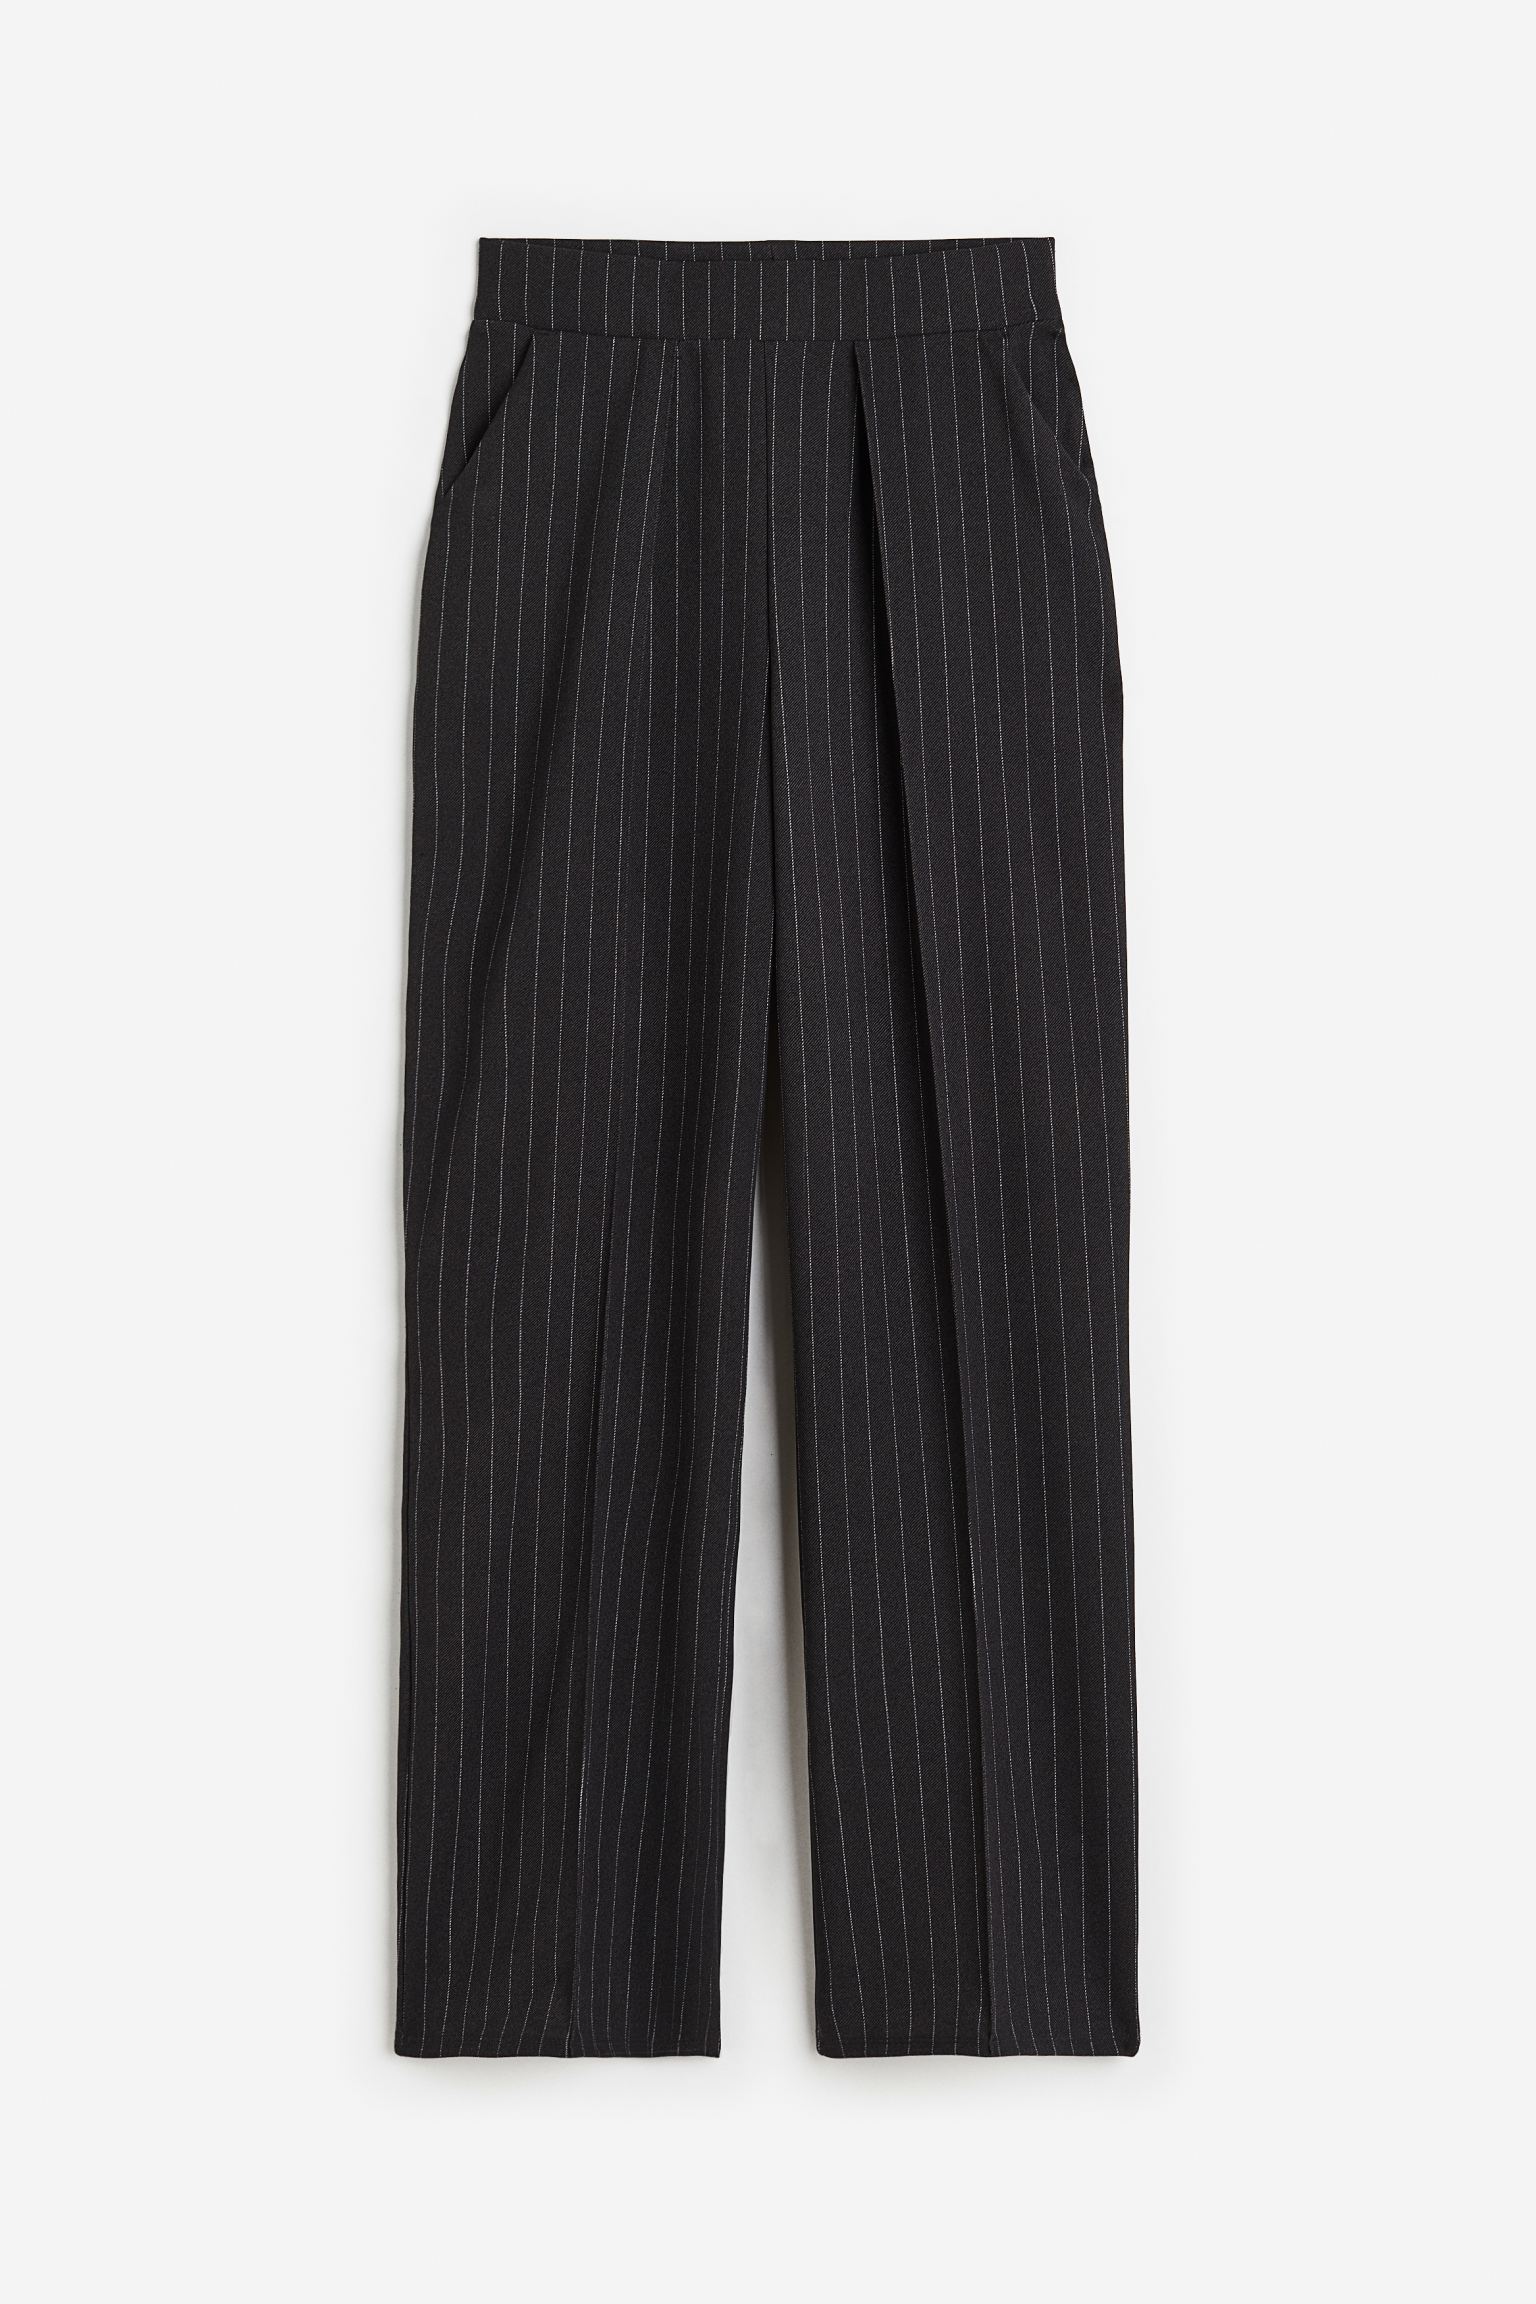 Брюки H&M High-waist Dress, темно-серый широкие креповые брюки sayakat со складками спереди ted baker цвет coral